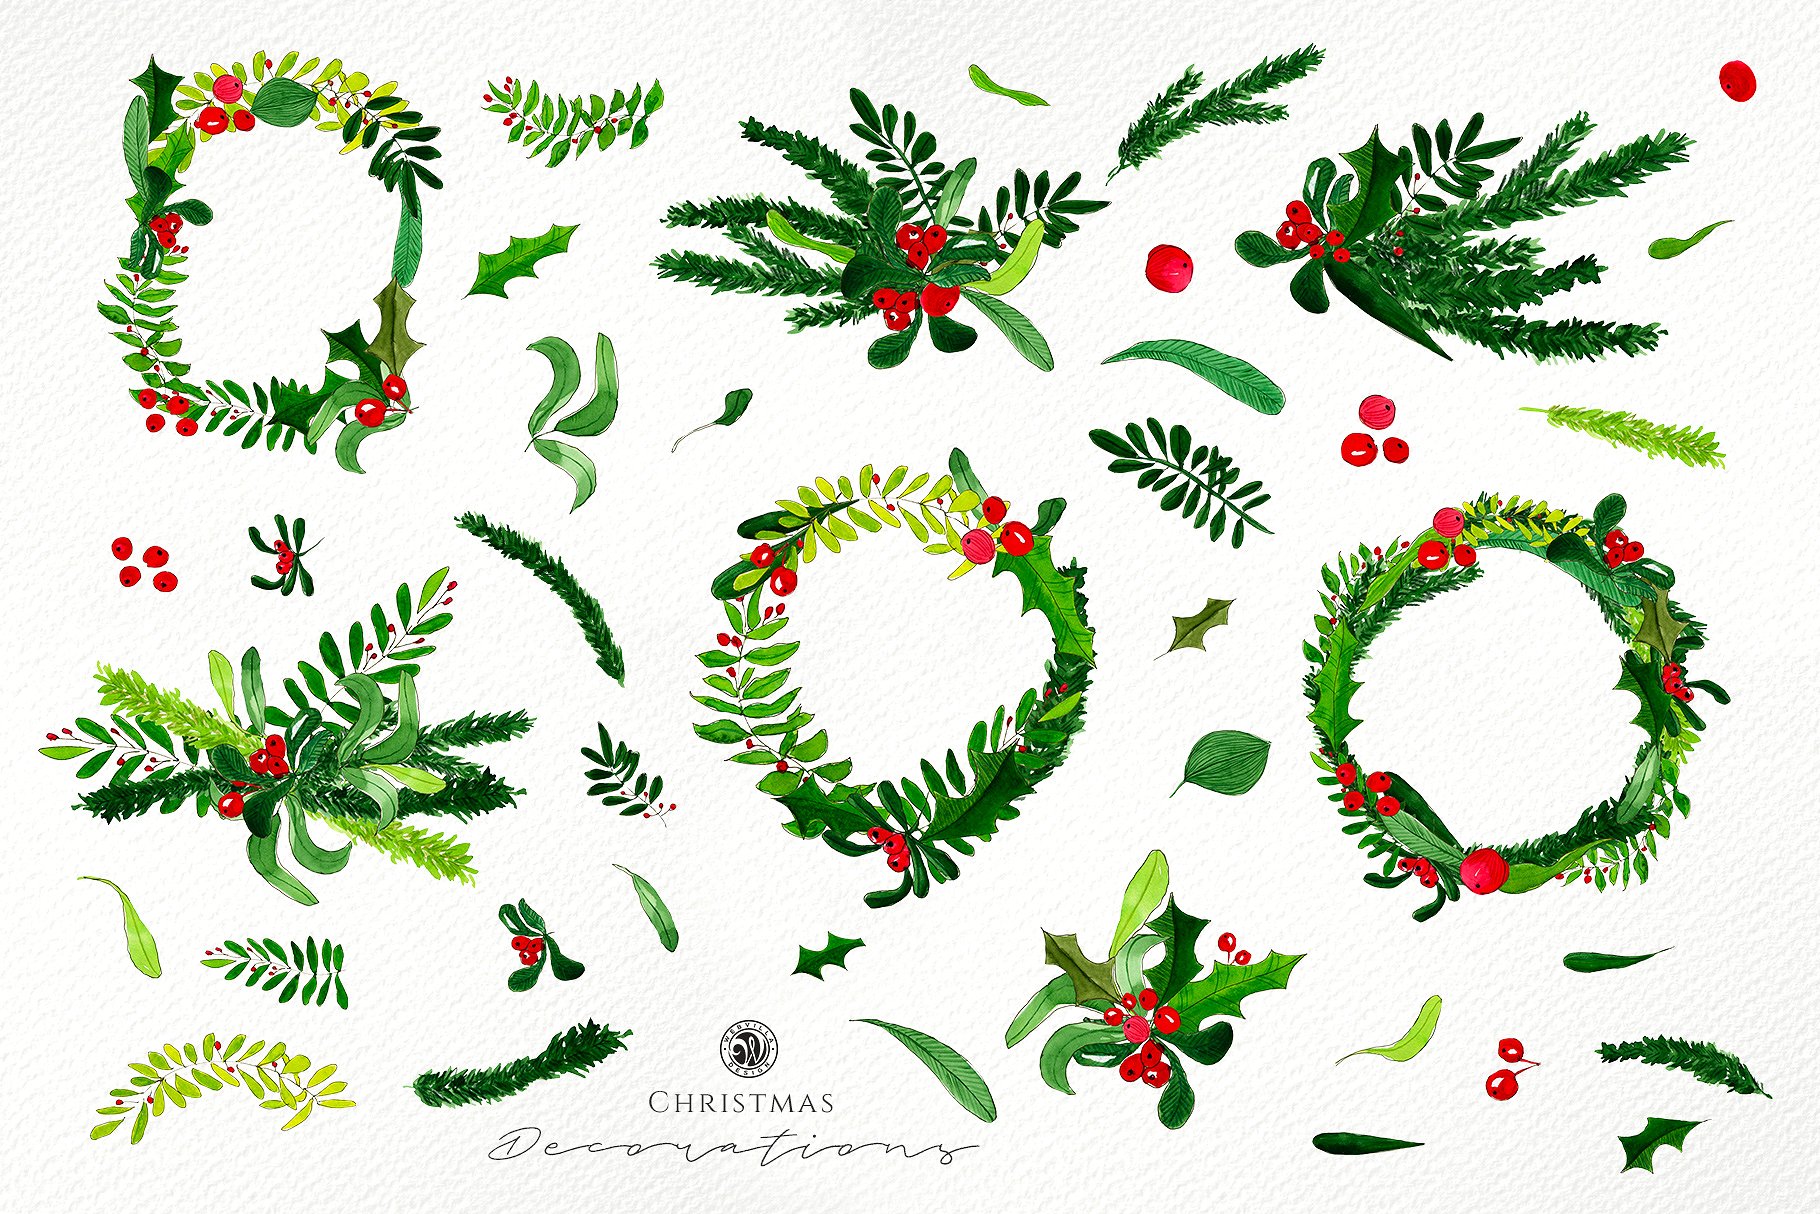 绿色水彩圣诞花卉装饰剪贴画合集 Watercolor Christmas Decorations插图(5)